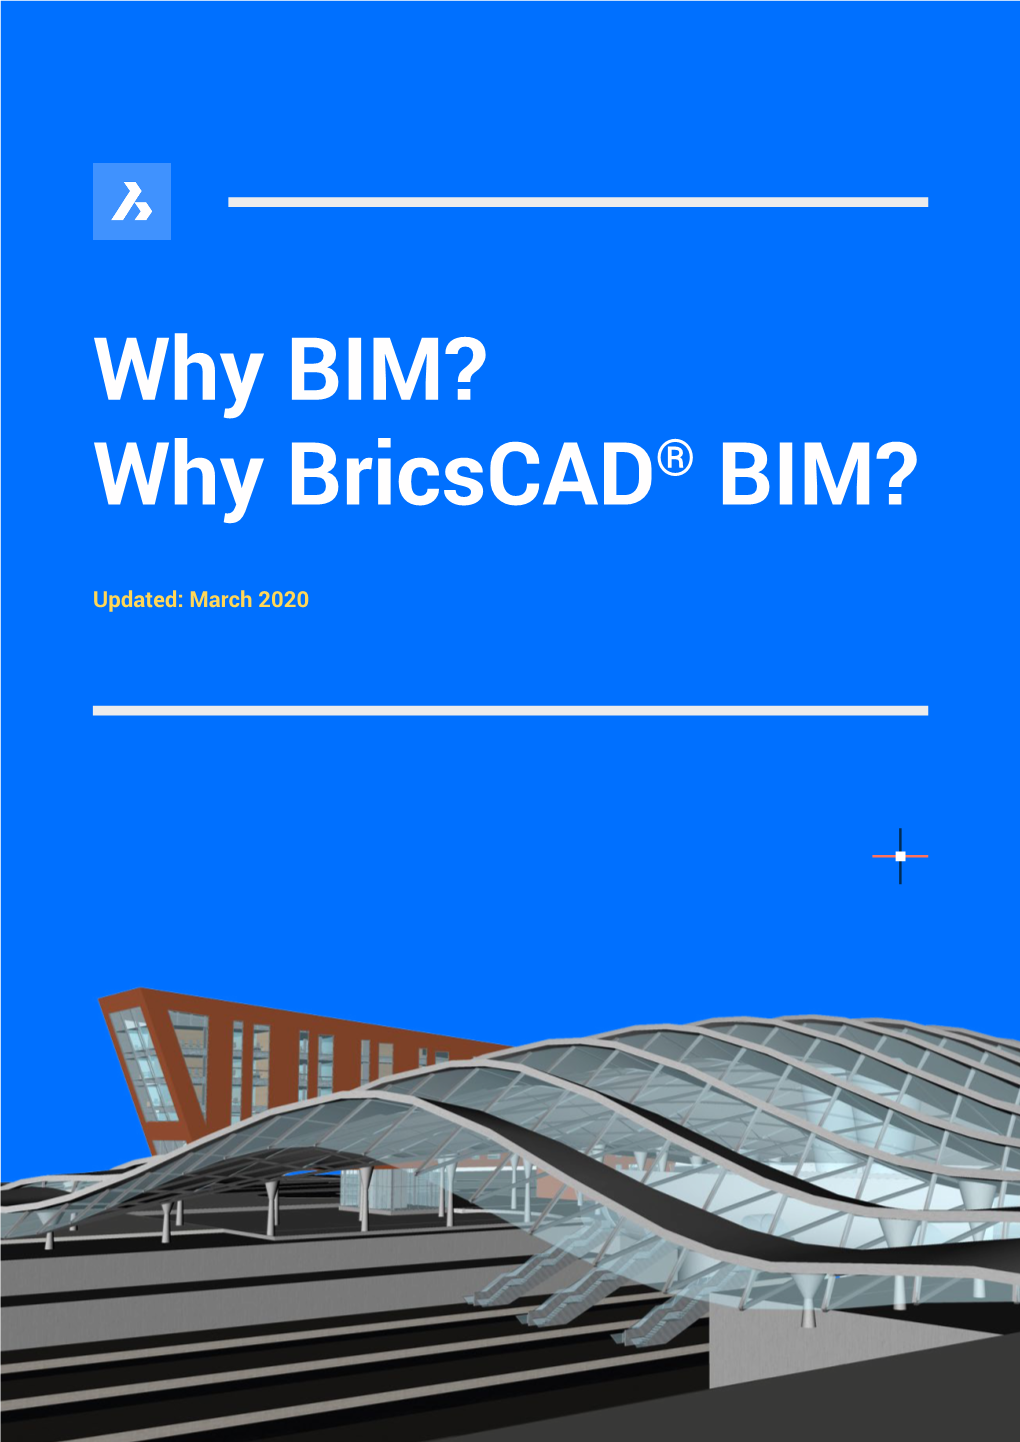 Why Bricscad® BIM?